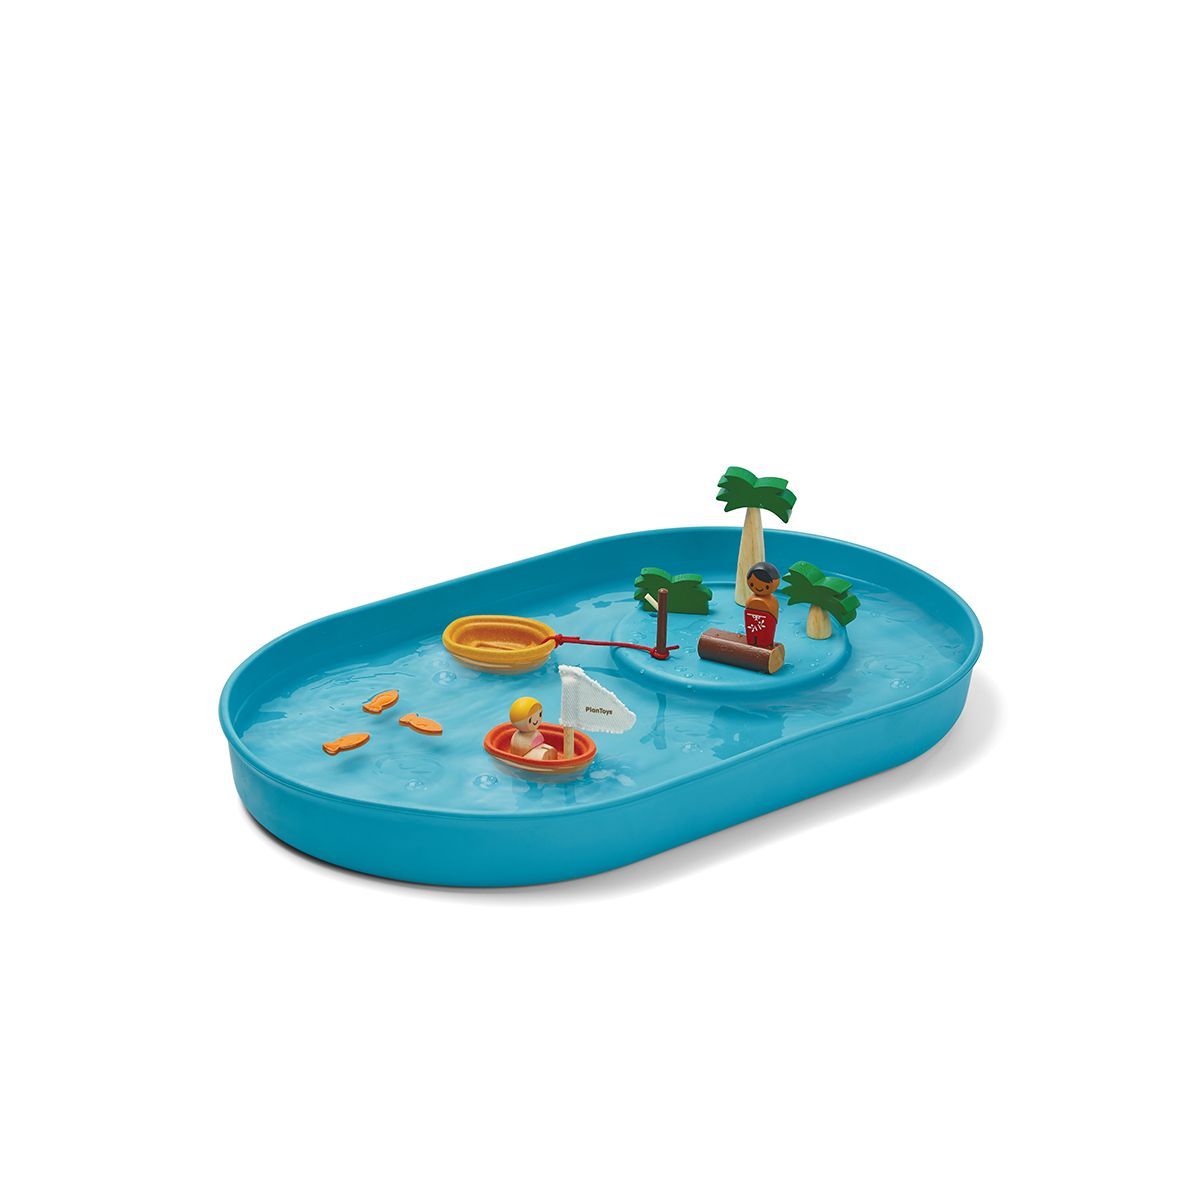 Plantoys| Water Play Set | Target